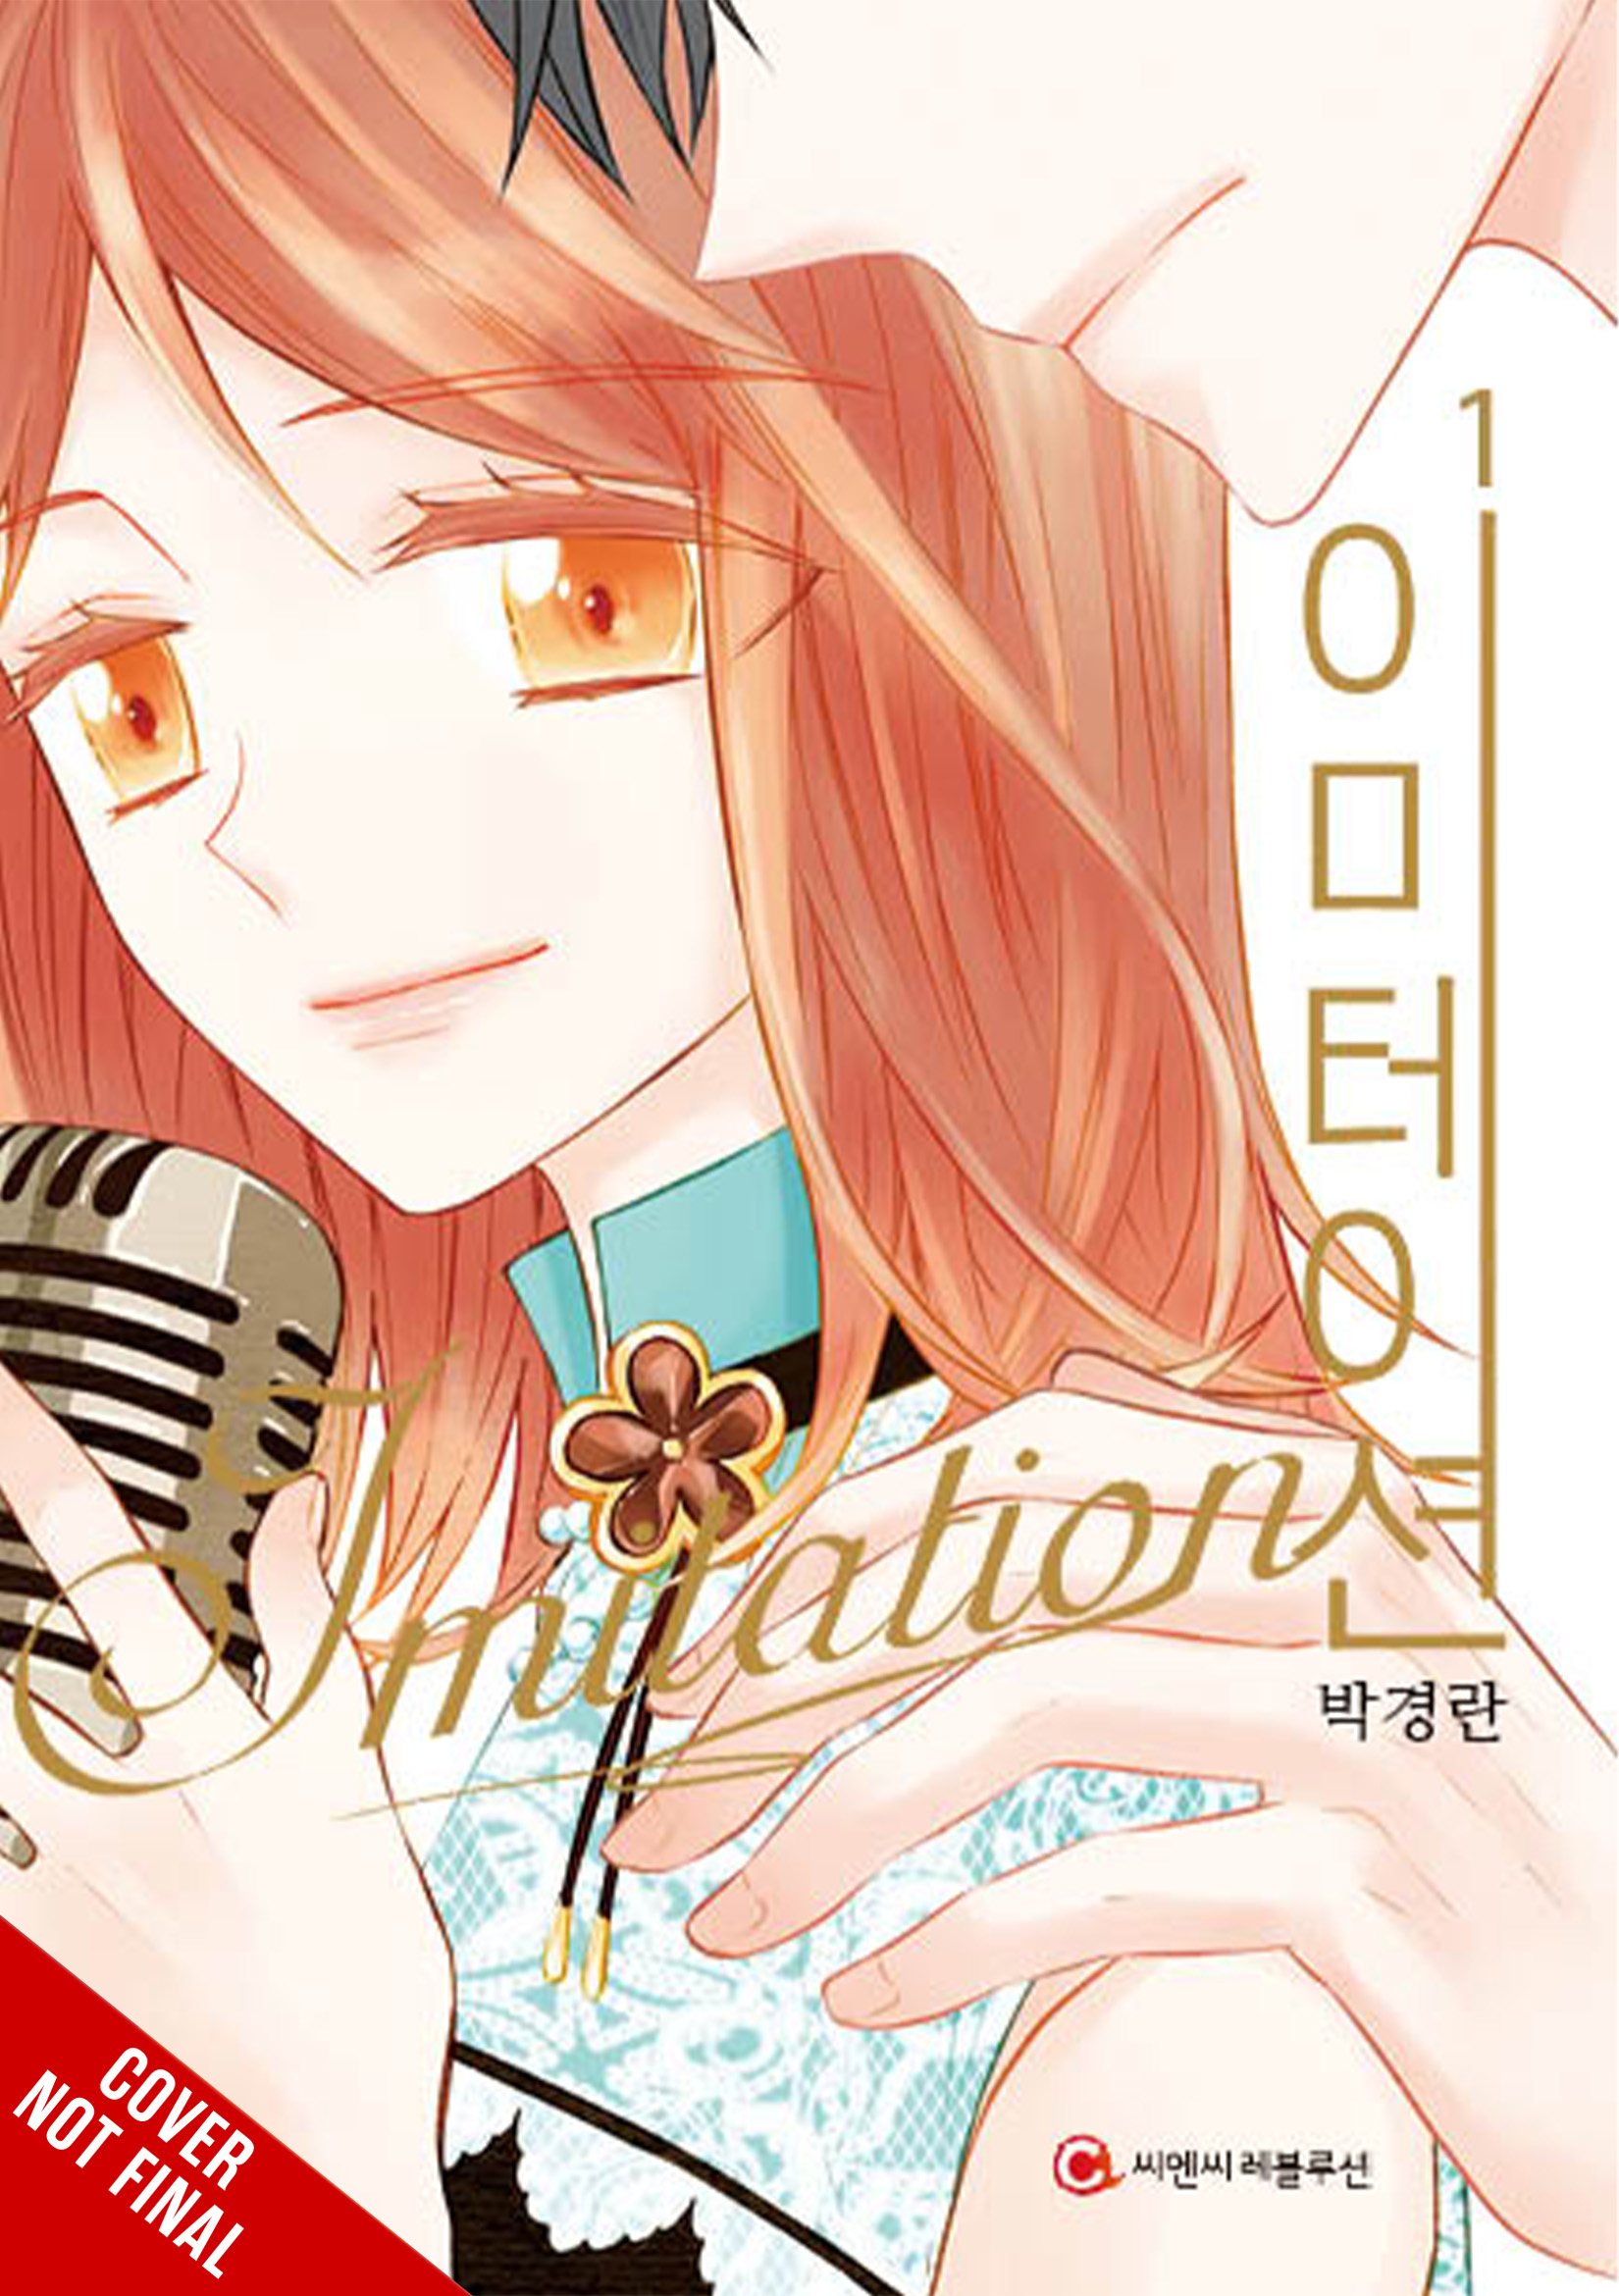 Imitation Manga Volume 1